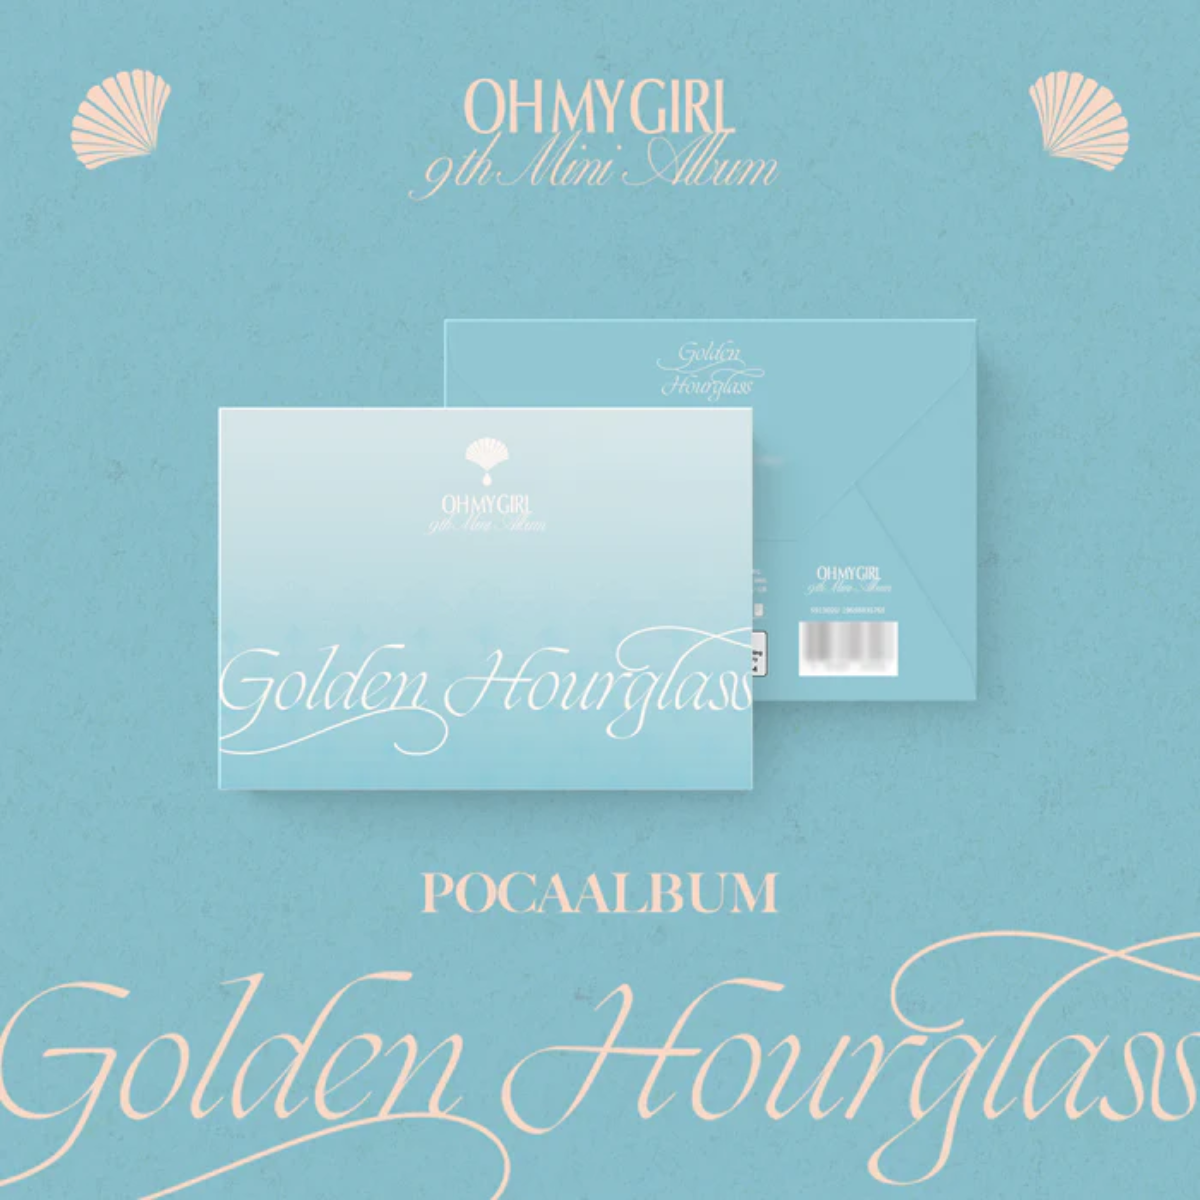 OH MY GIRL Mini Vol. 9 - Golden Hourglass (Poca Album) (Random Version)